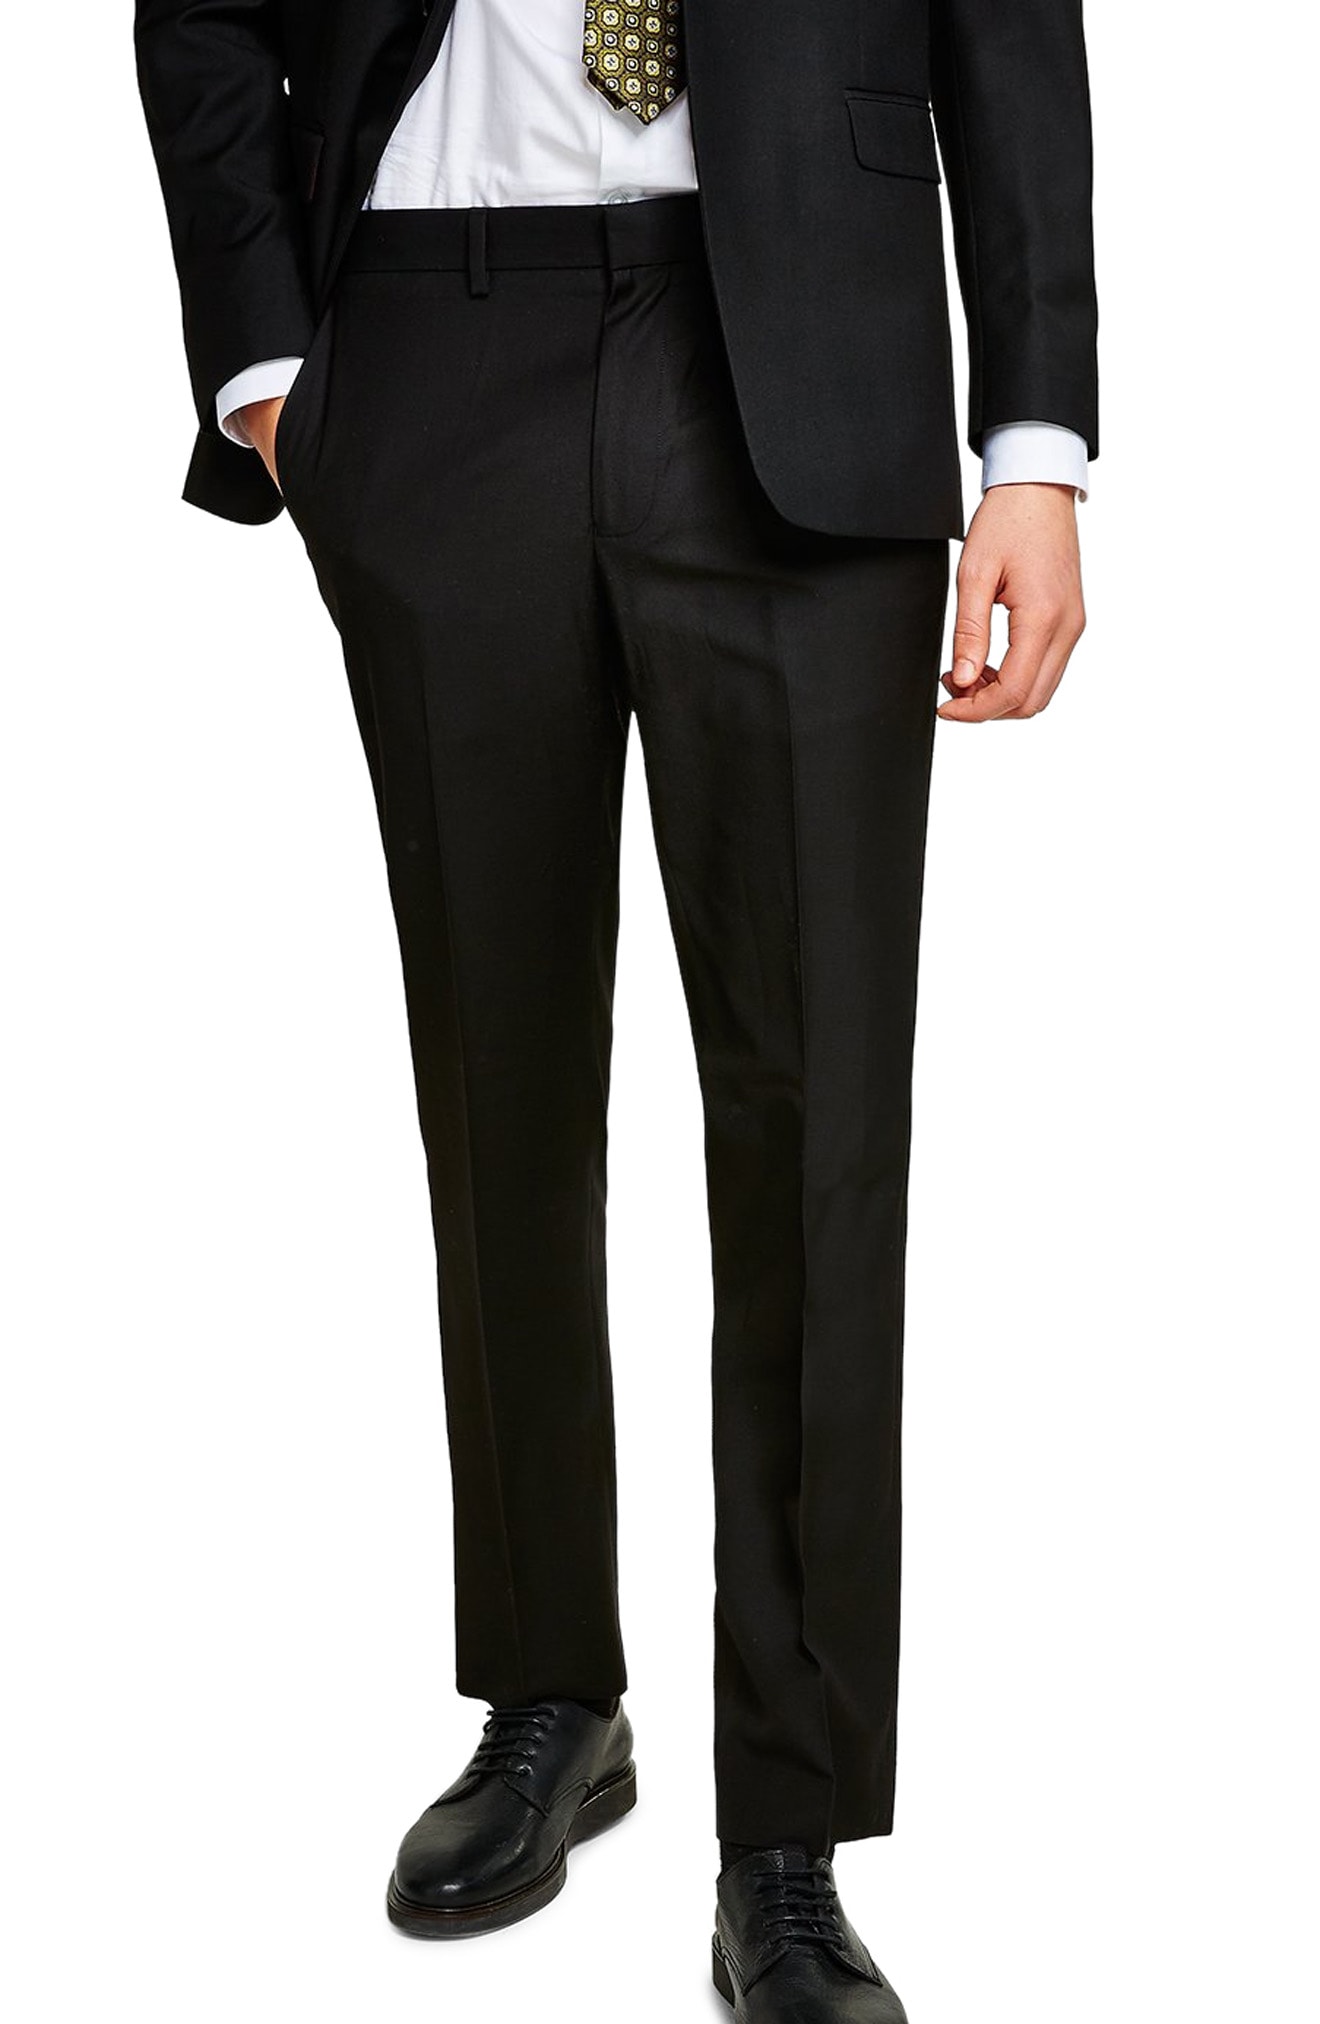 Men’s Topman Slim Fit Suit Trousers, Size 28 x 32 – Black | The Fashionisto